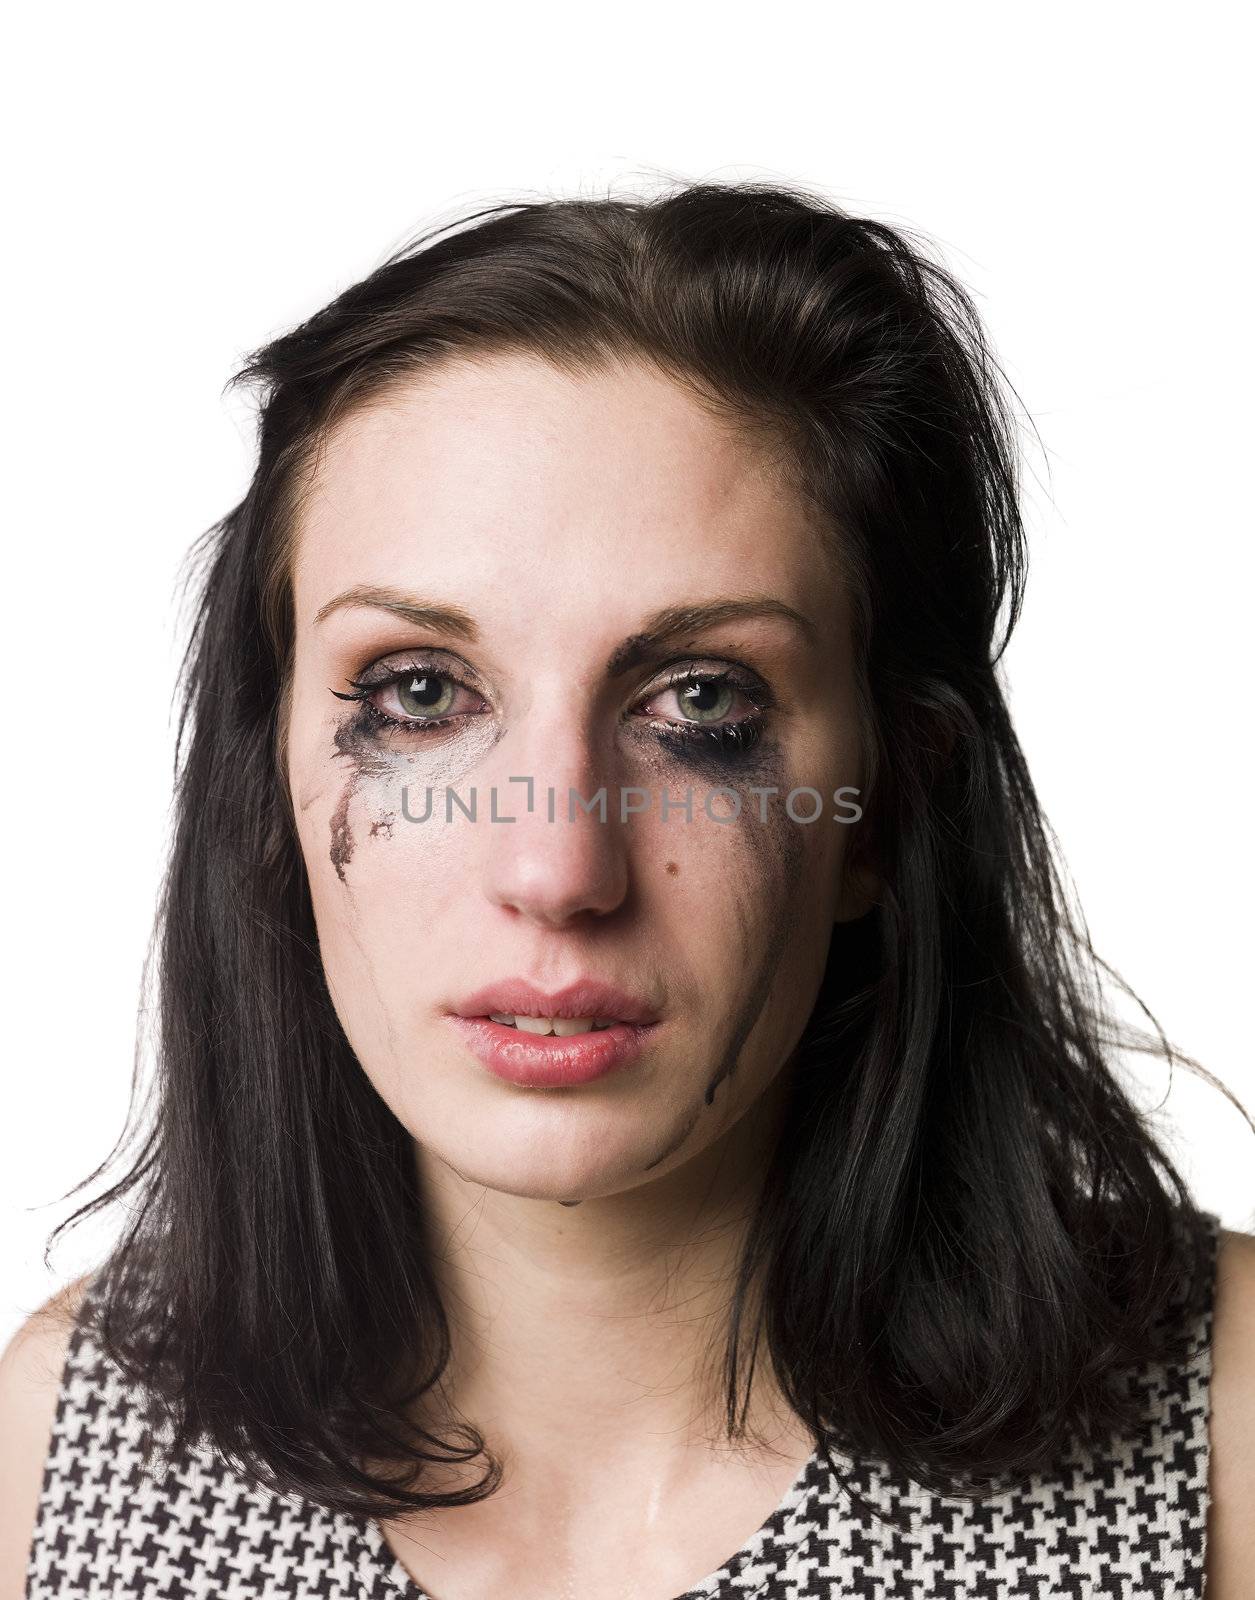 Crying woman by gemenacom